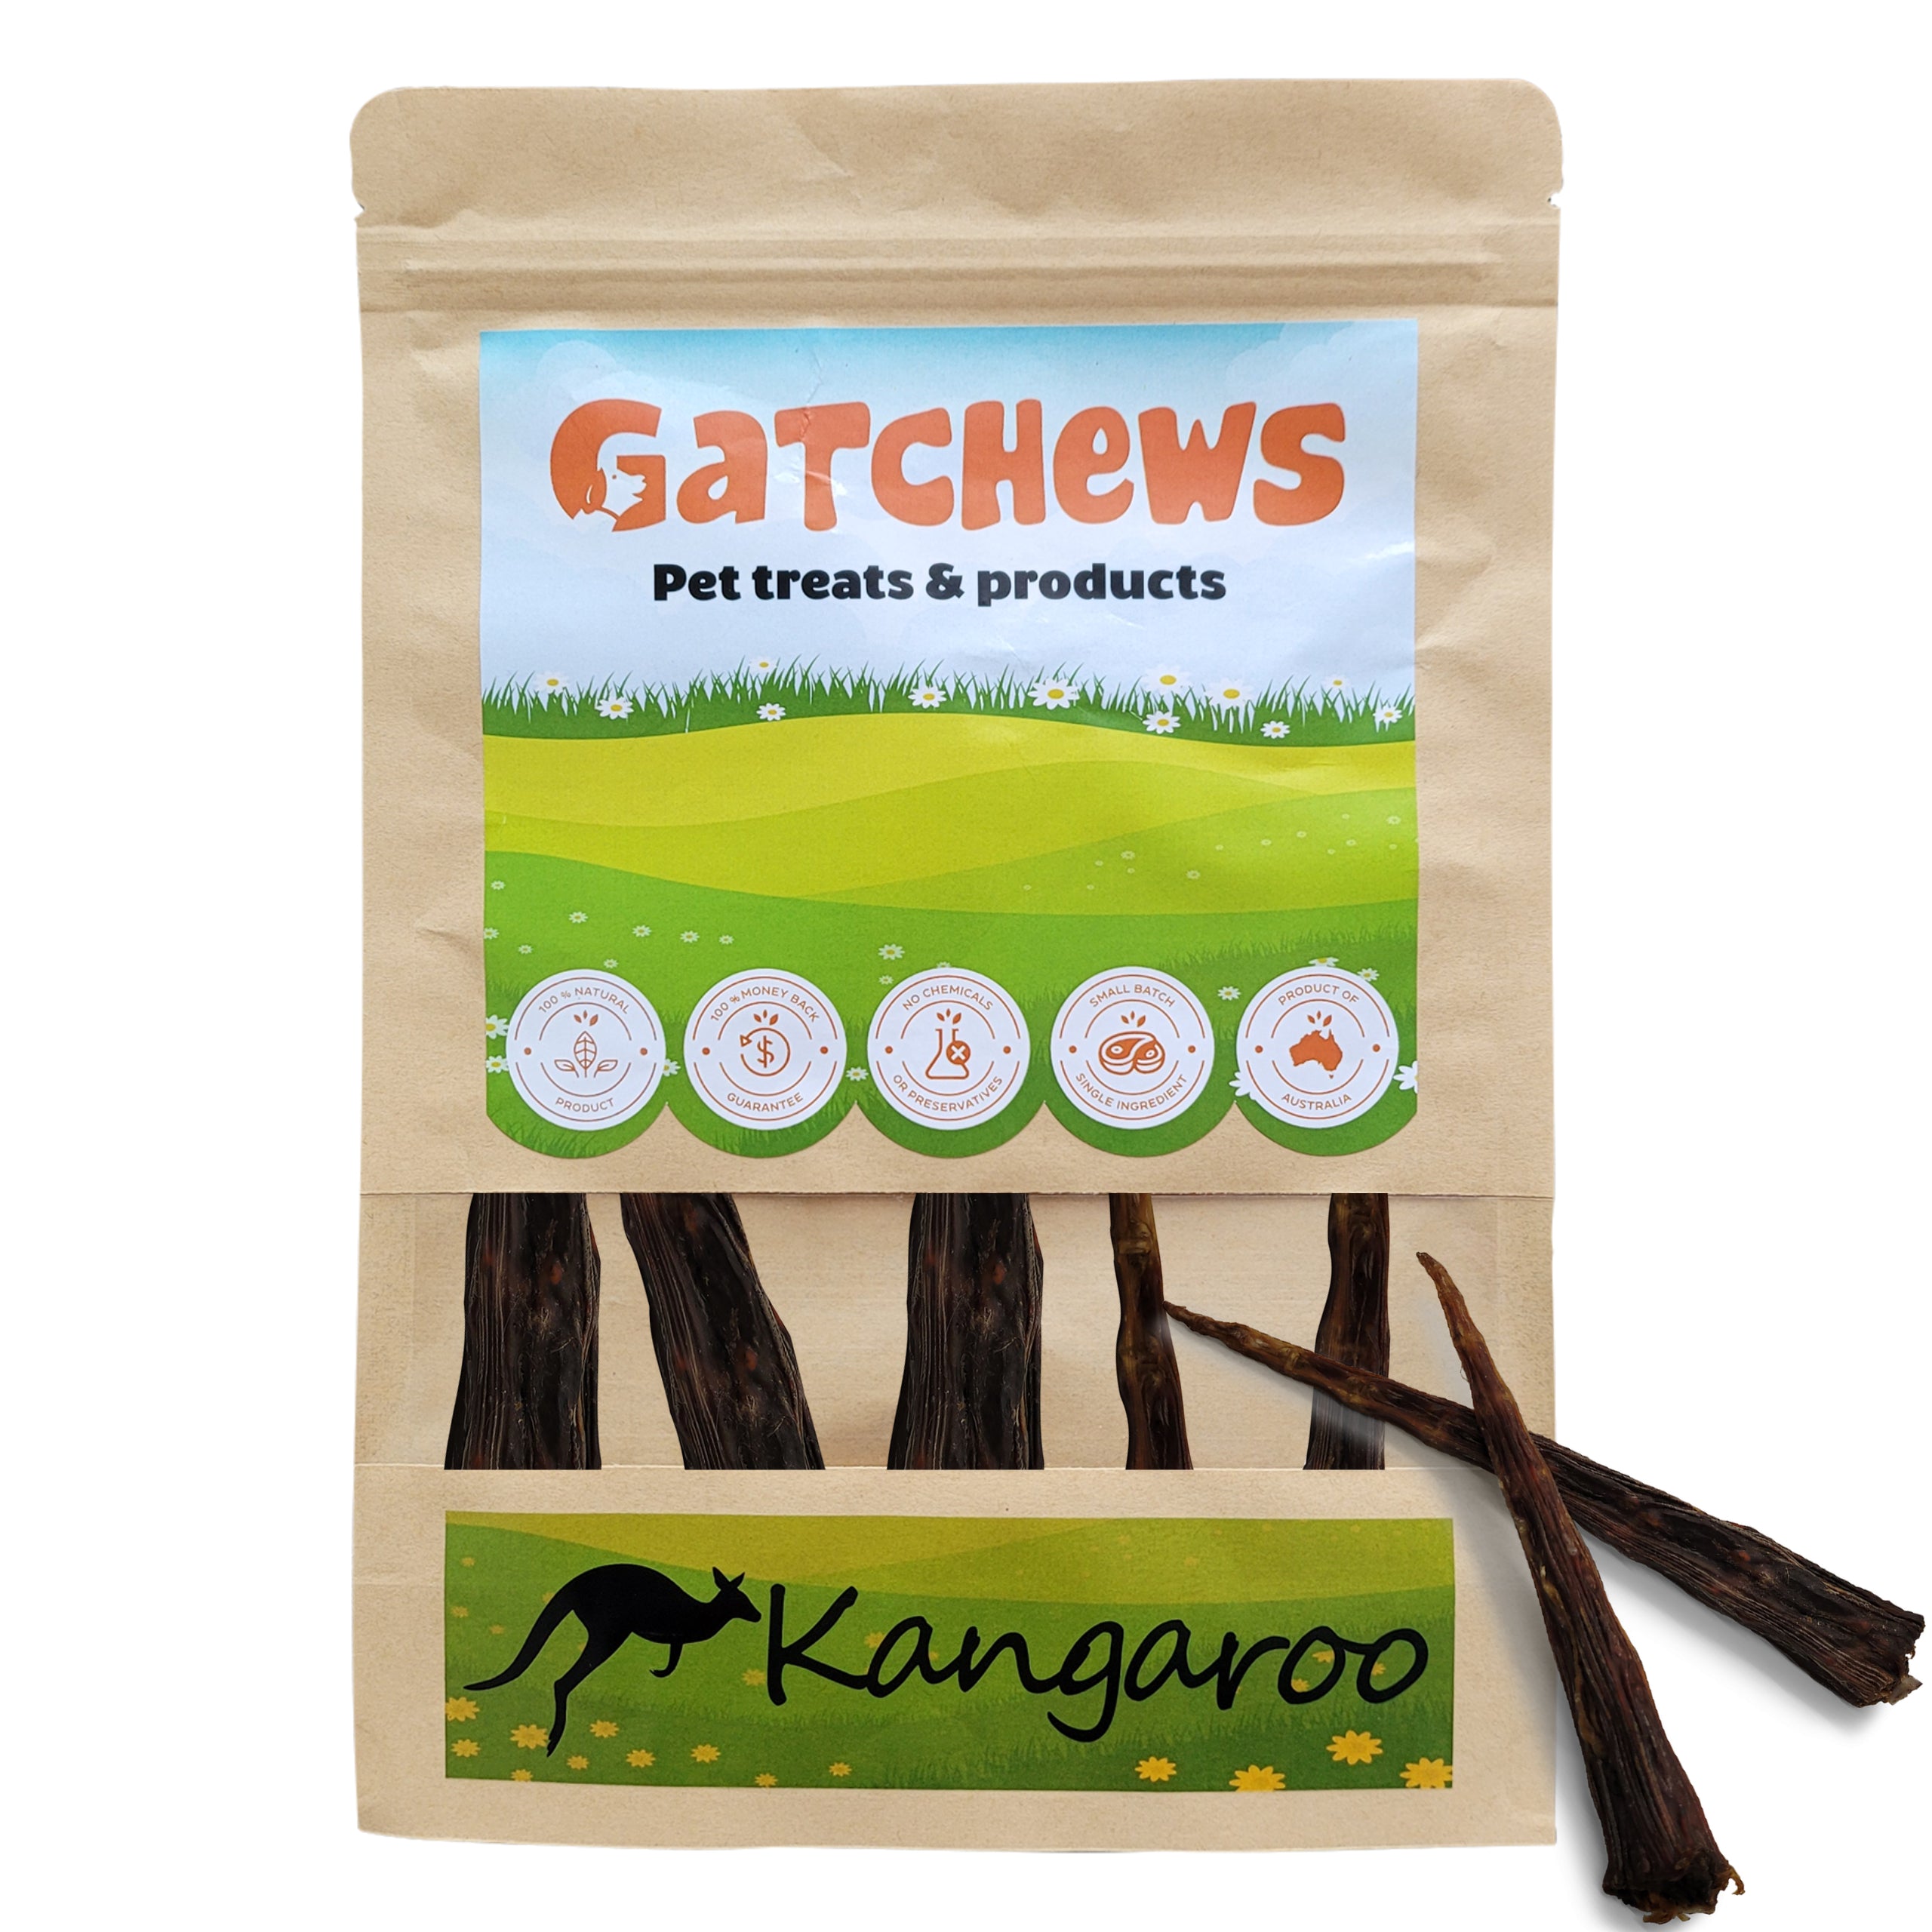 Gatchews Happy Town Pets Kangaroo tail tips chews & treats package (6570216128673)